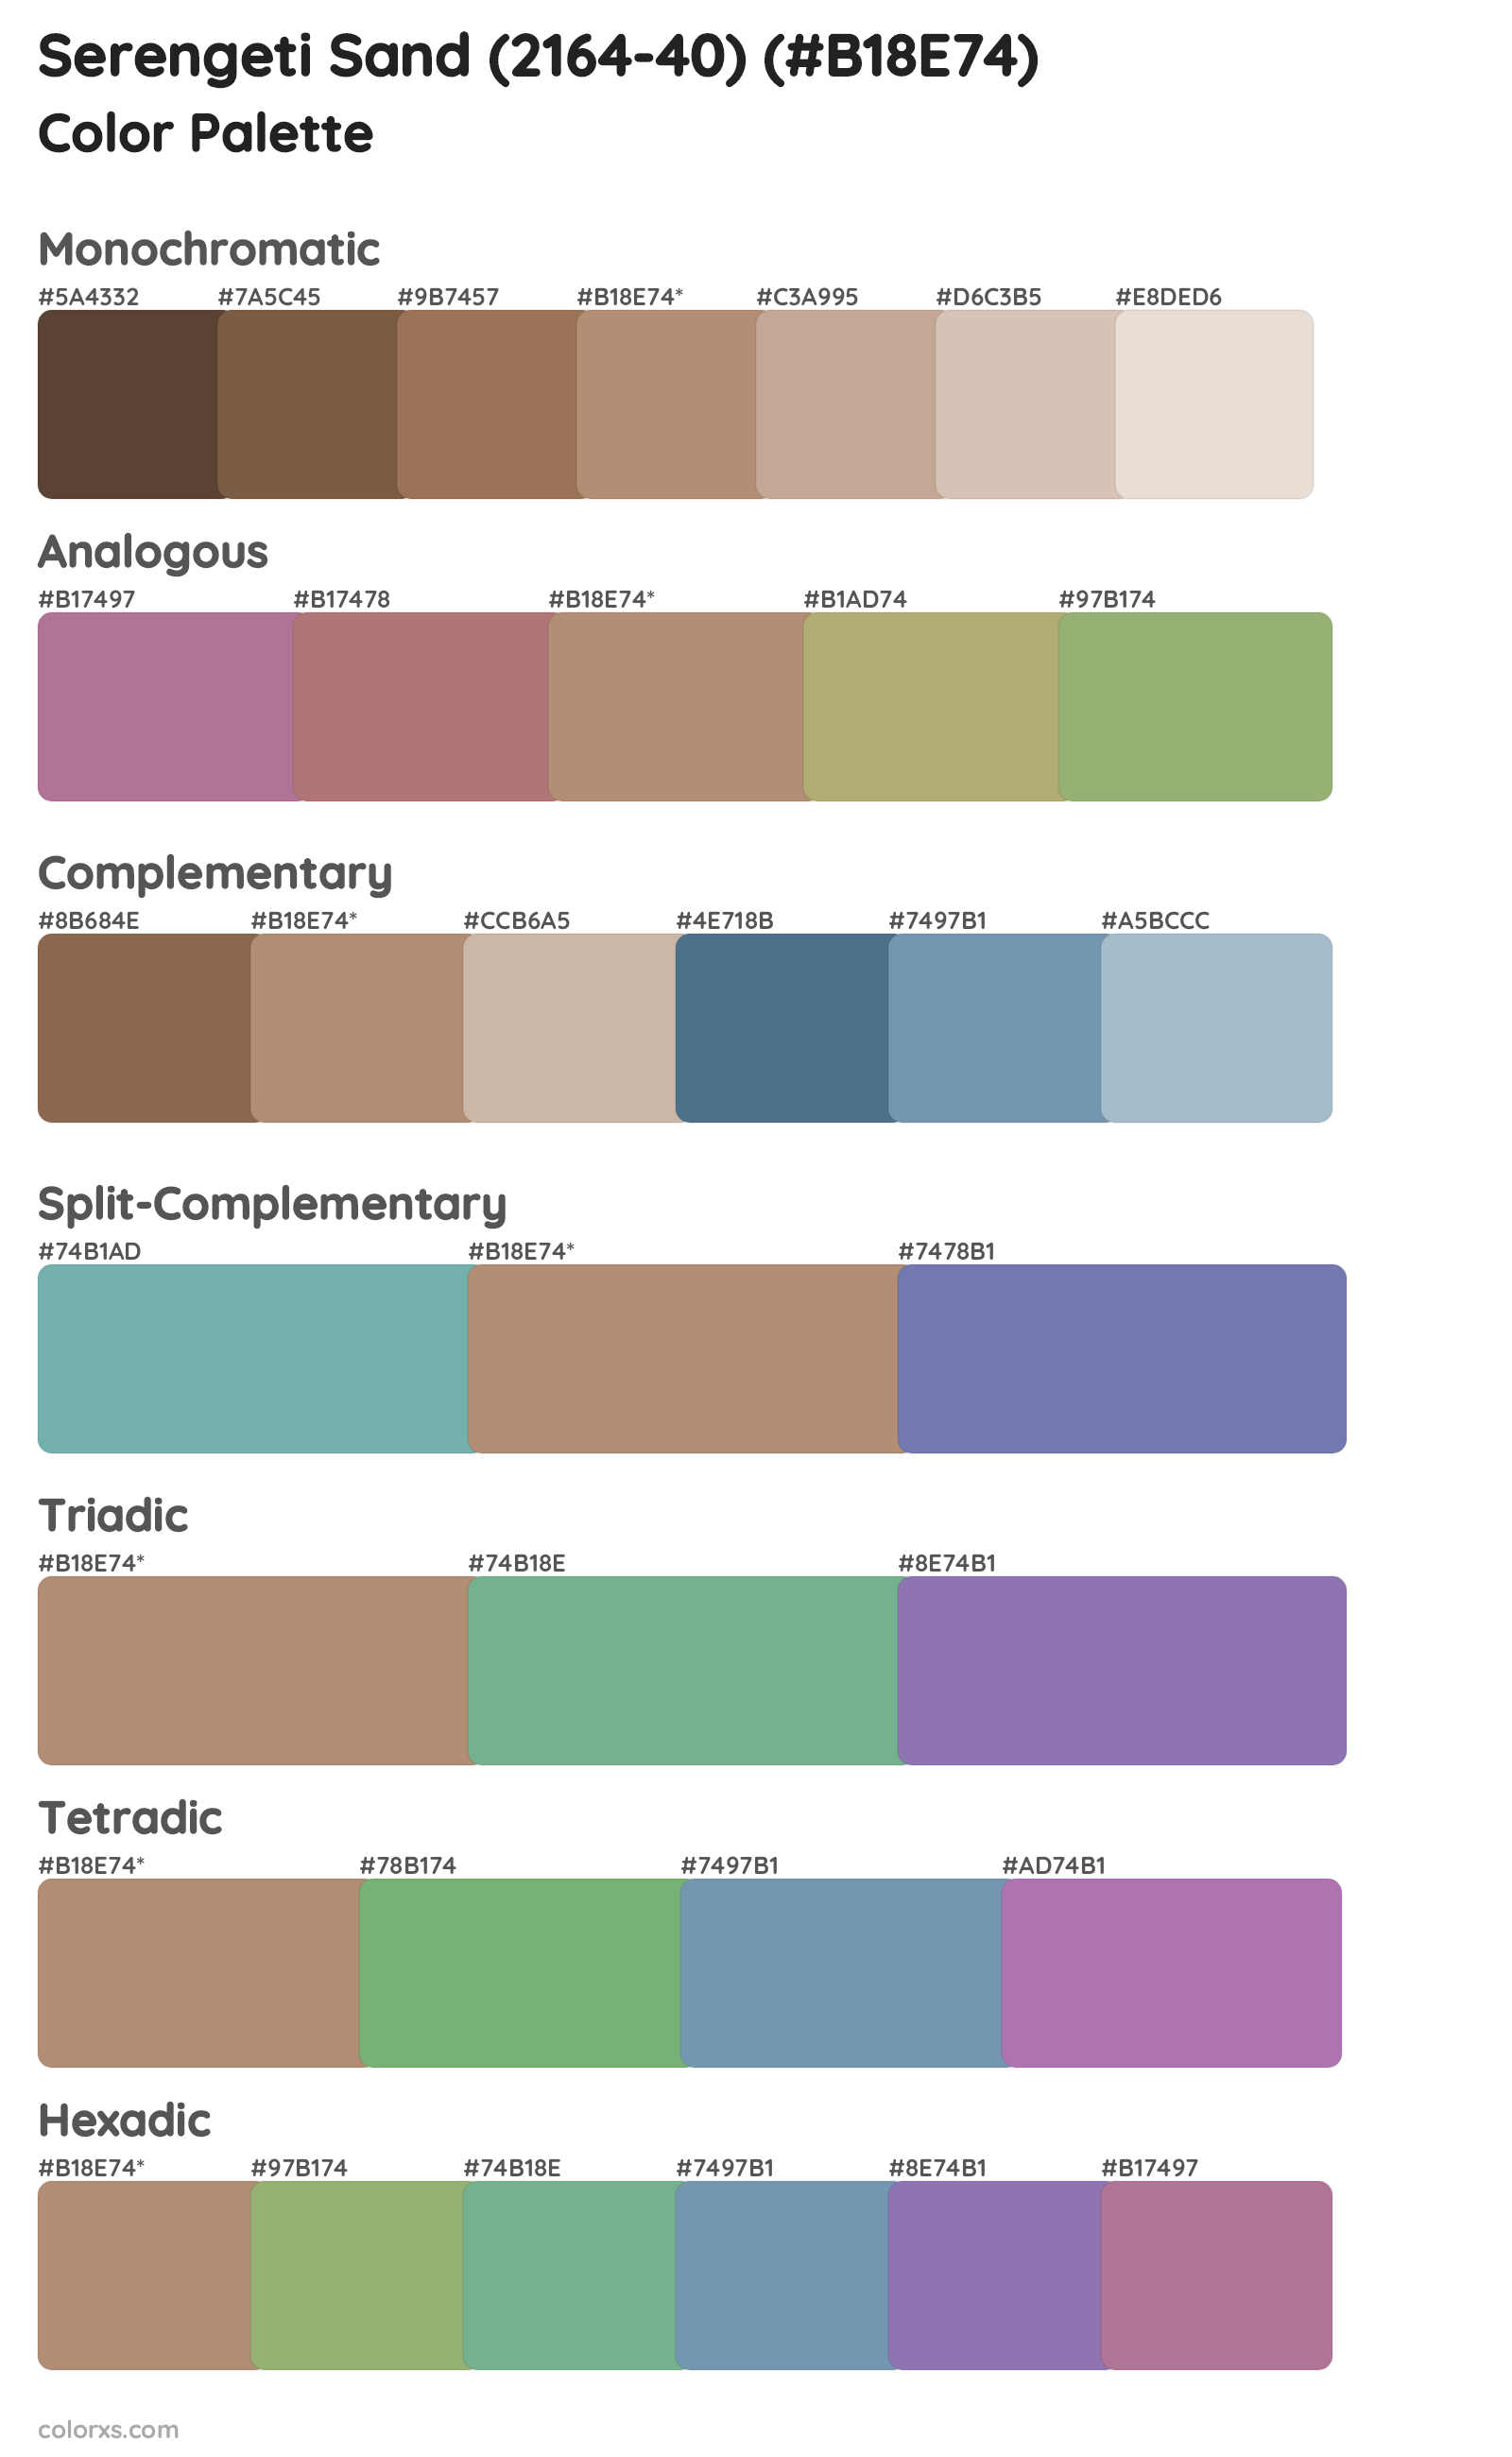 Serengeti Sand (2164-40) Color Scheme Palettes